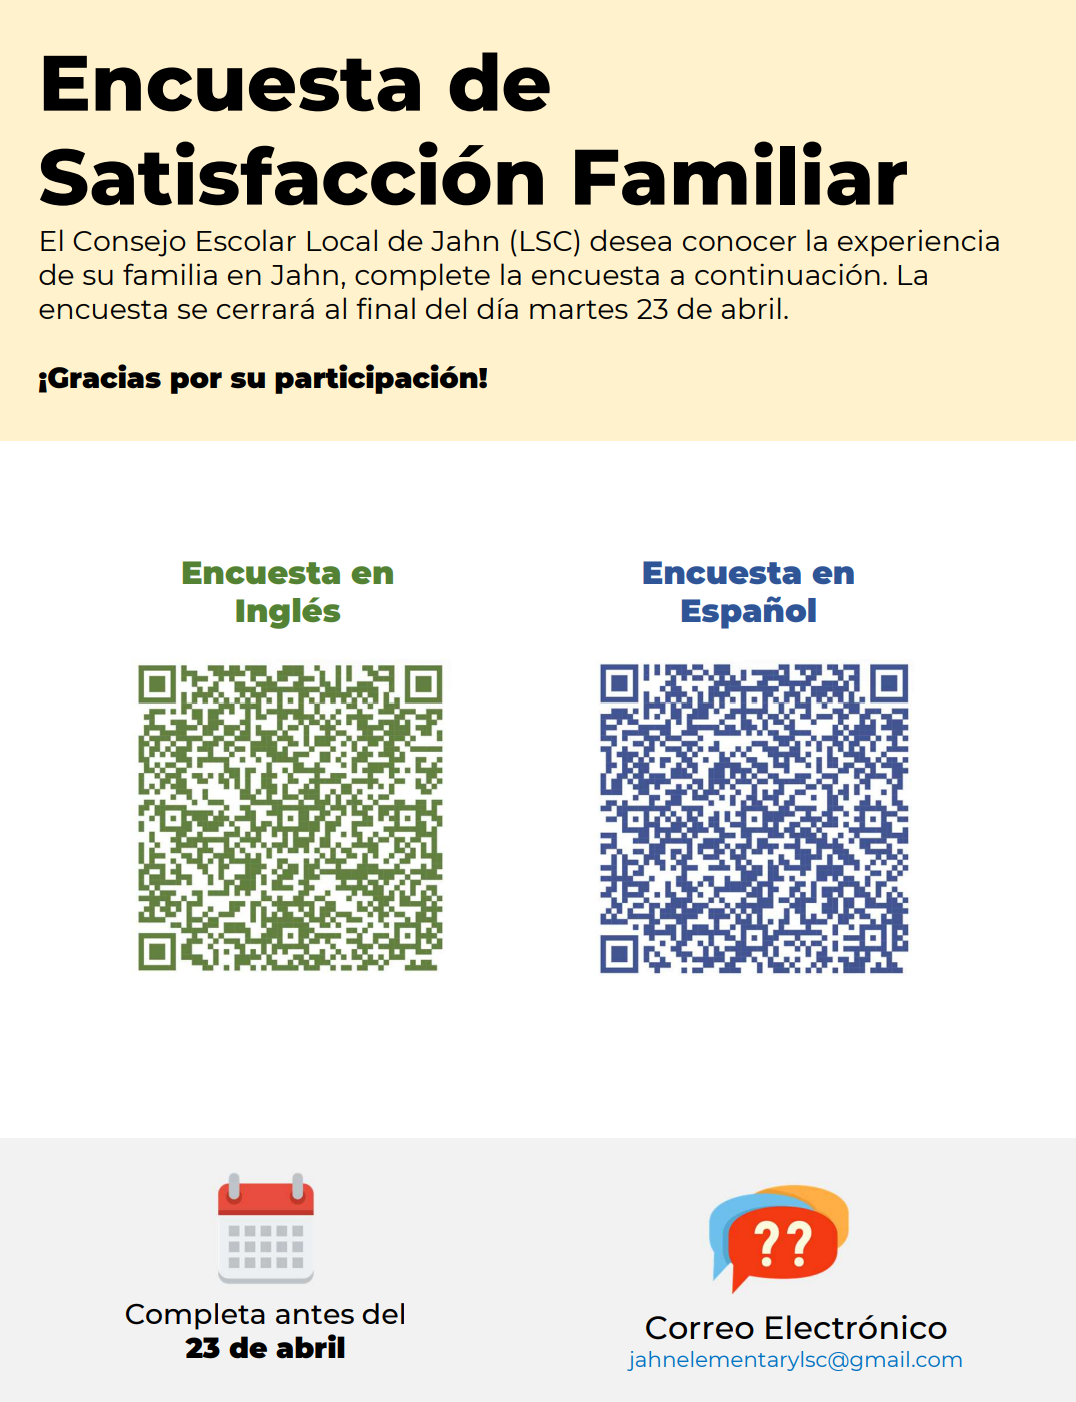 Satisfaction survey in Spanish